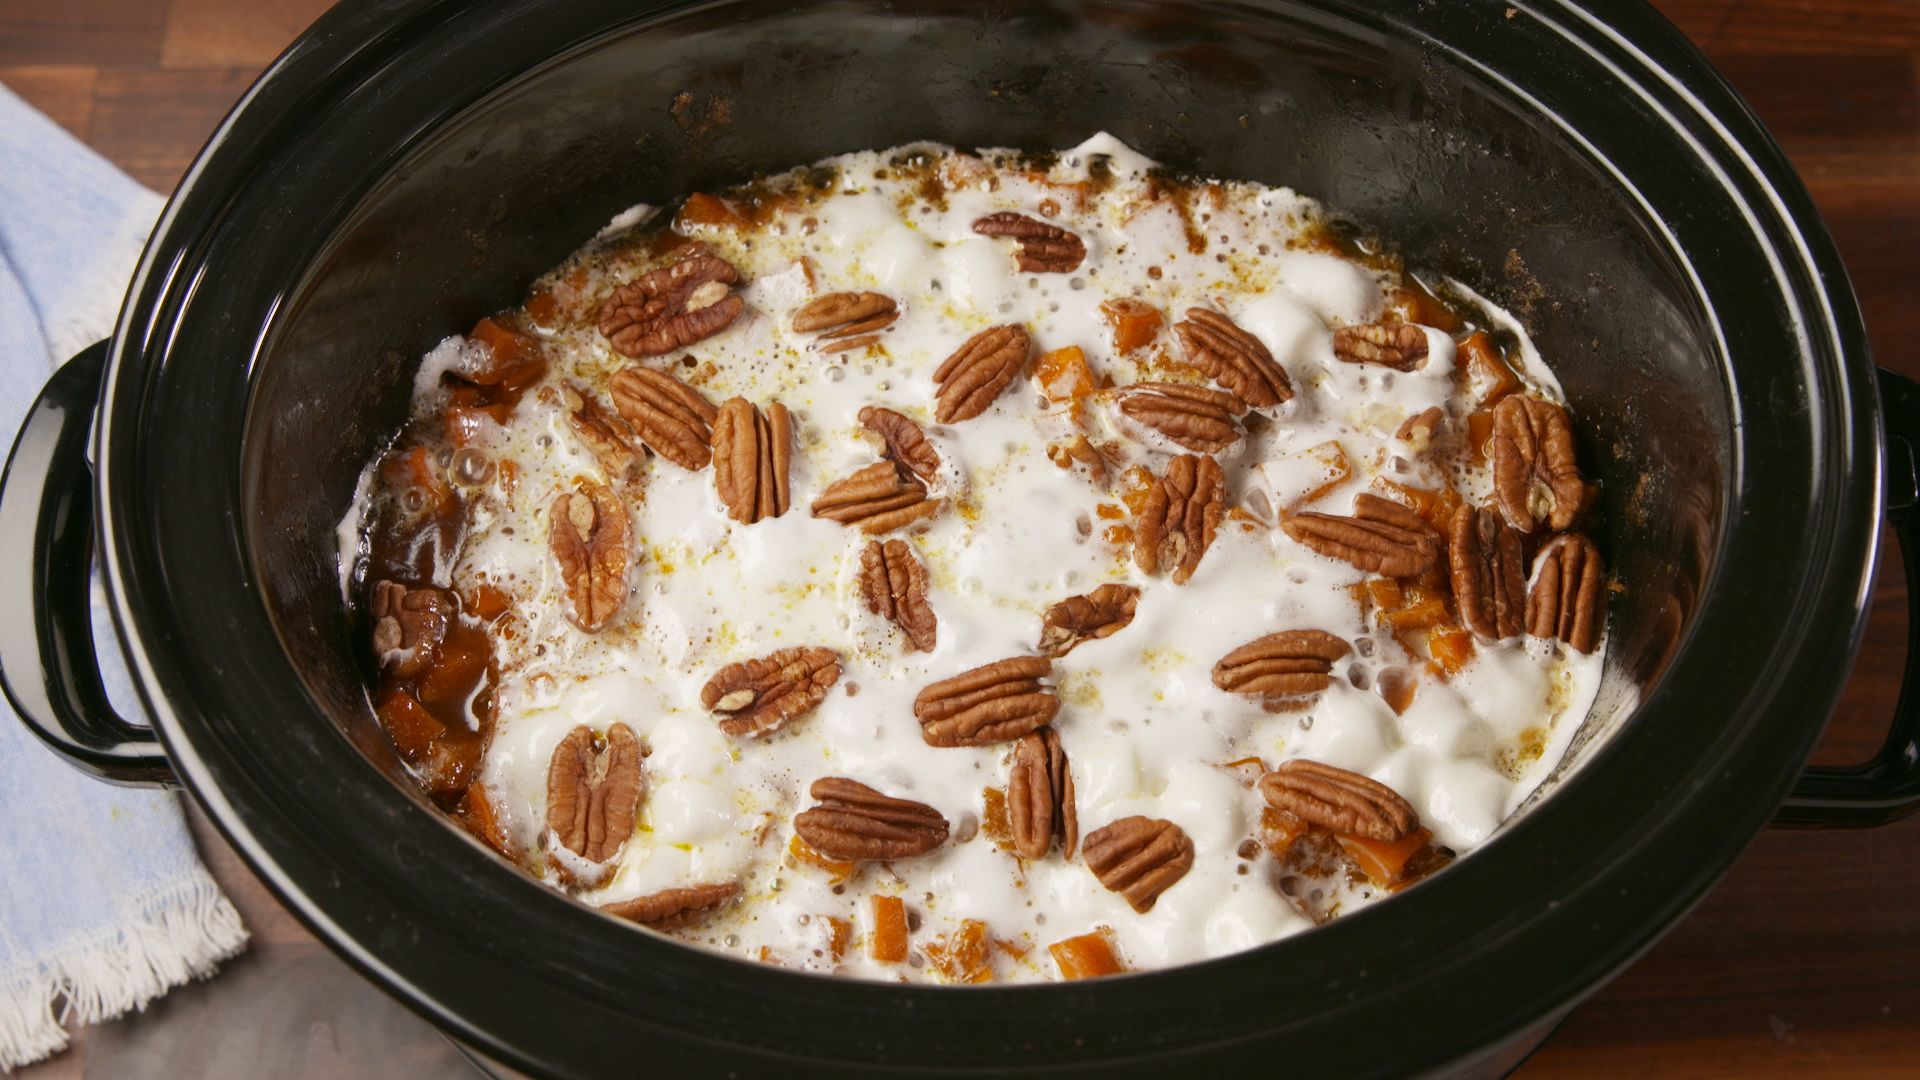 Best Crock-Pot Sweet Potato Casserole Recipe - How to
        Make Crock-Pot Sweet Potato Casserole